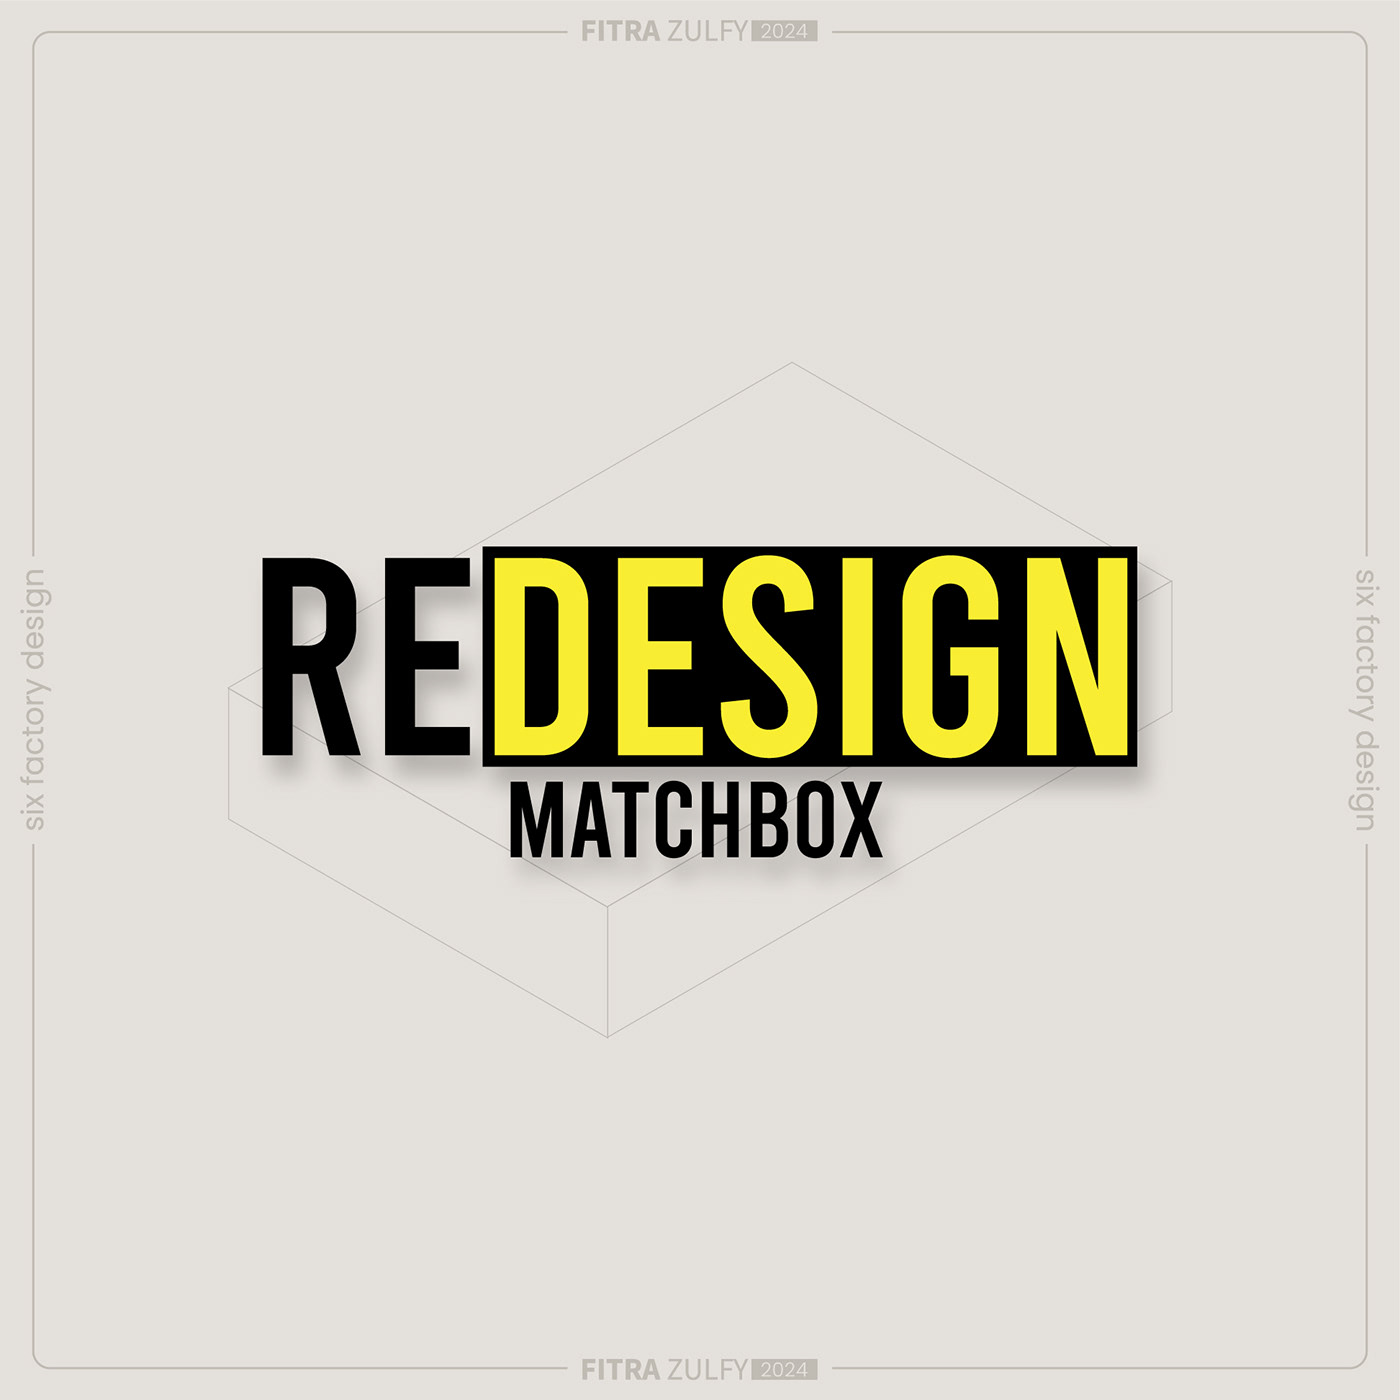 redesign design Matchbox matchbox design Packaging graphicdesign branding  visual identity Graphic Designer Brand Design